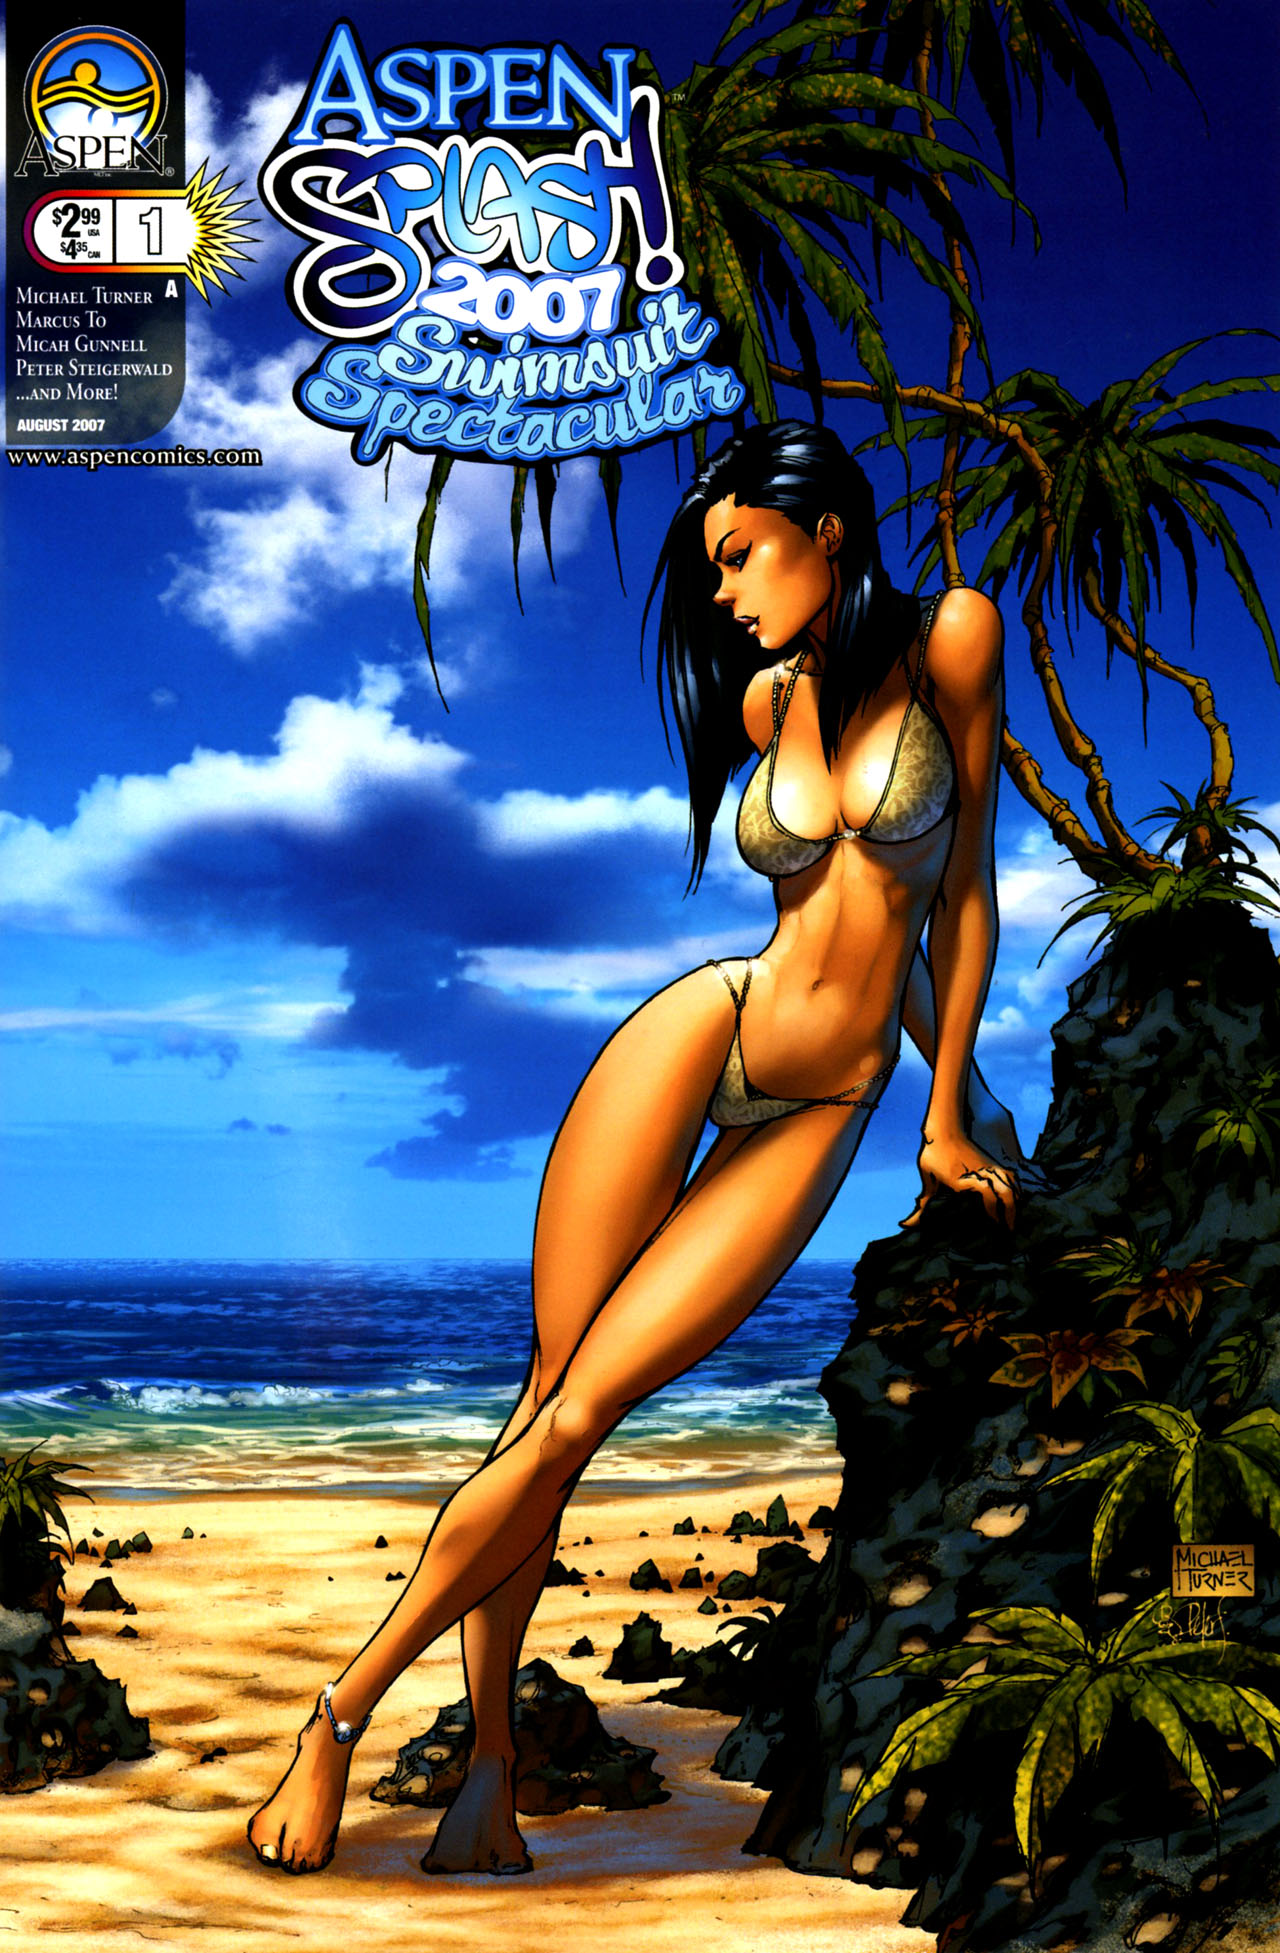 Read online Aspen Splash: Swimsuit Spectacular comic -  Issue # Issue 2007 - 1